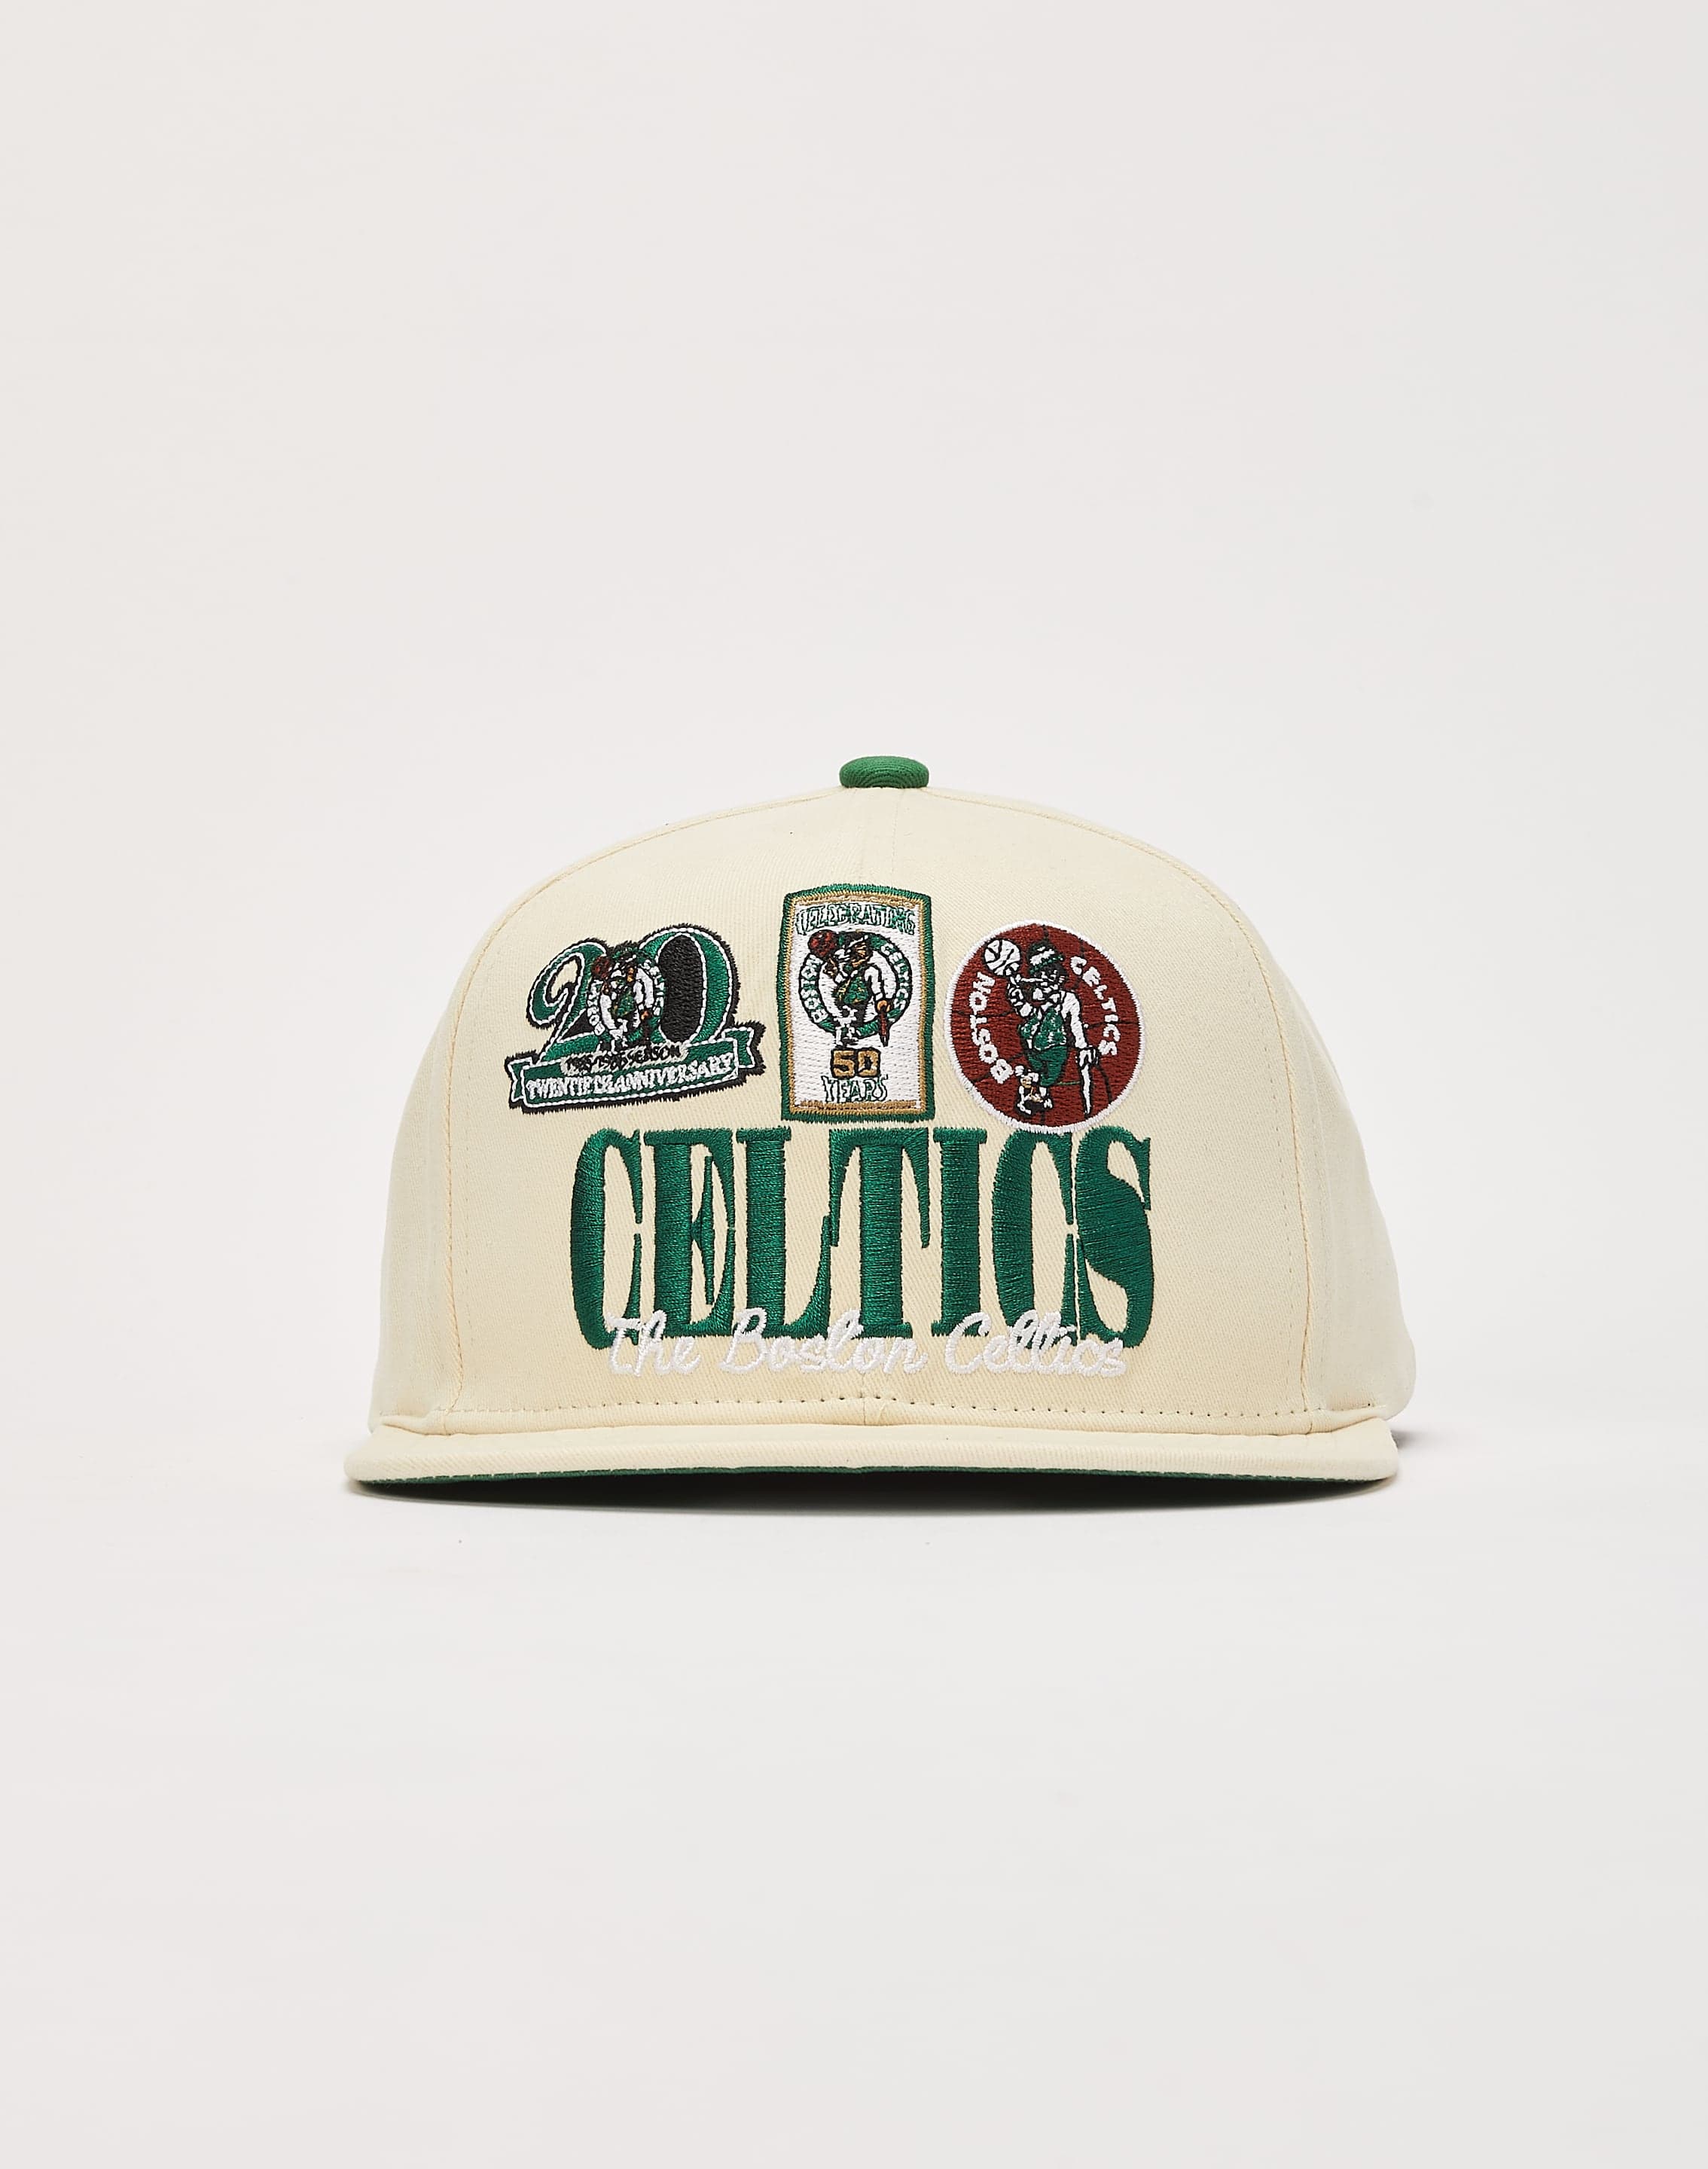 Shop Mitchell & Ness Boston Celtics Reframe Retro Snapback